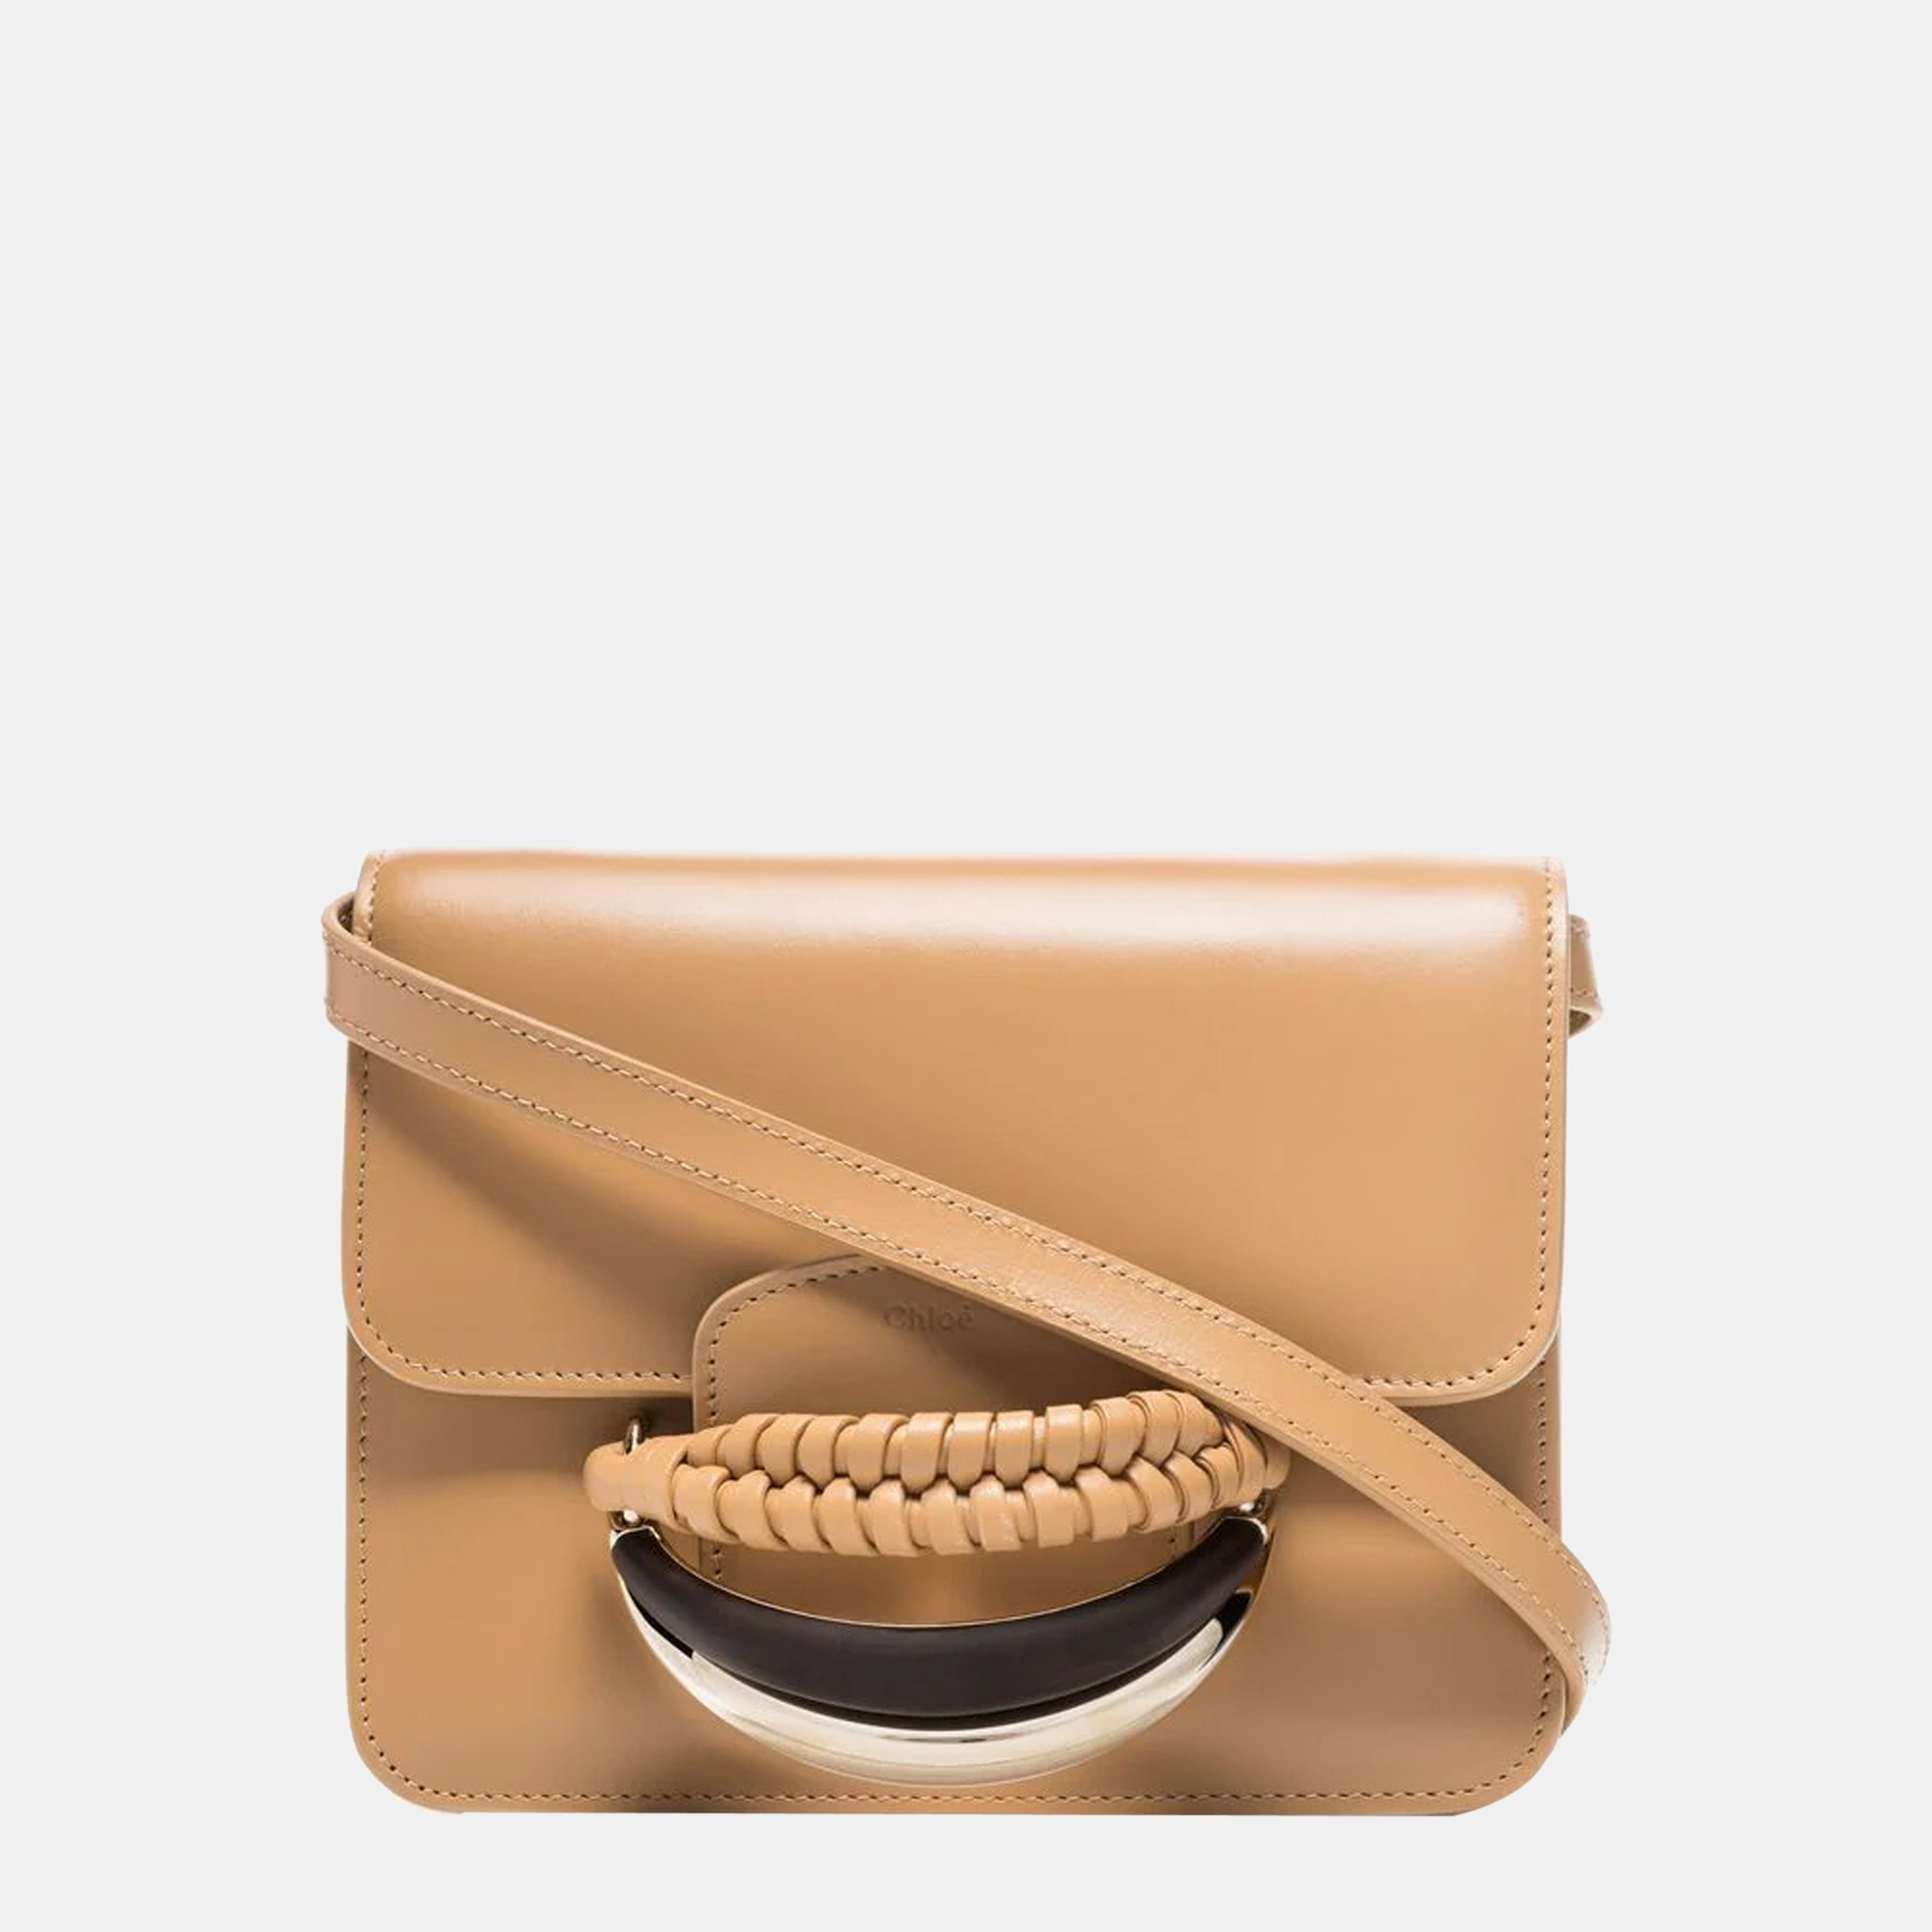 Chloe beige - leather - crossbody bag